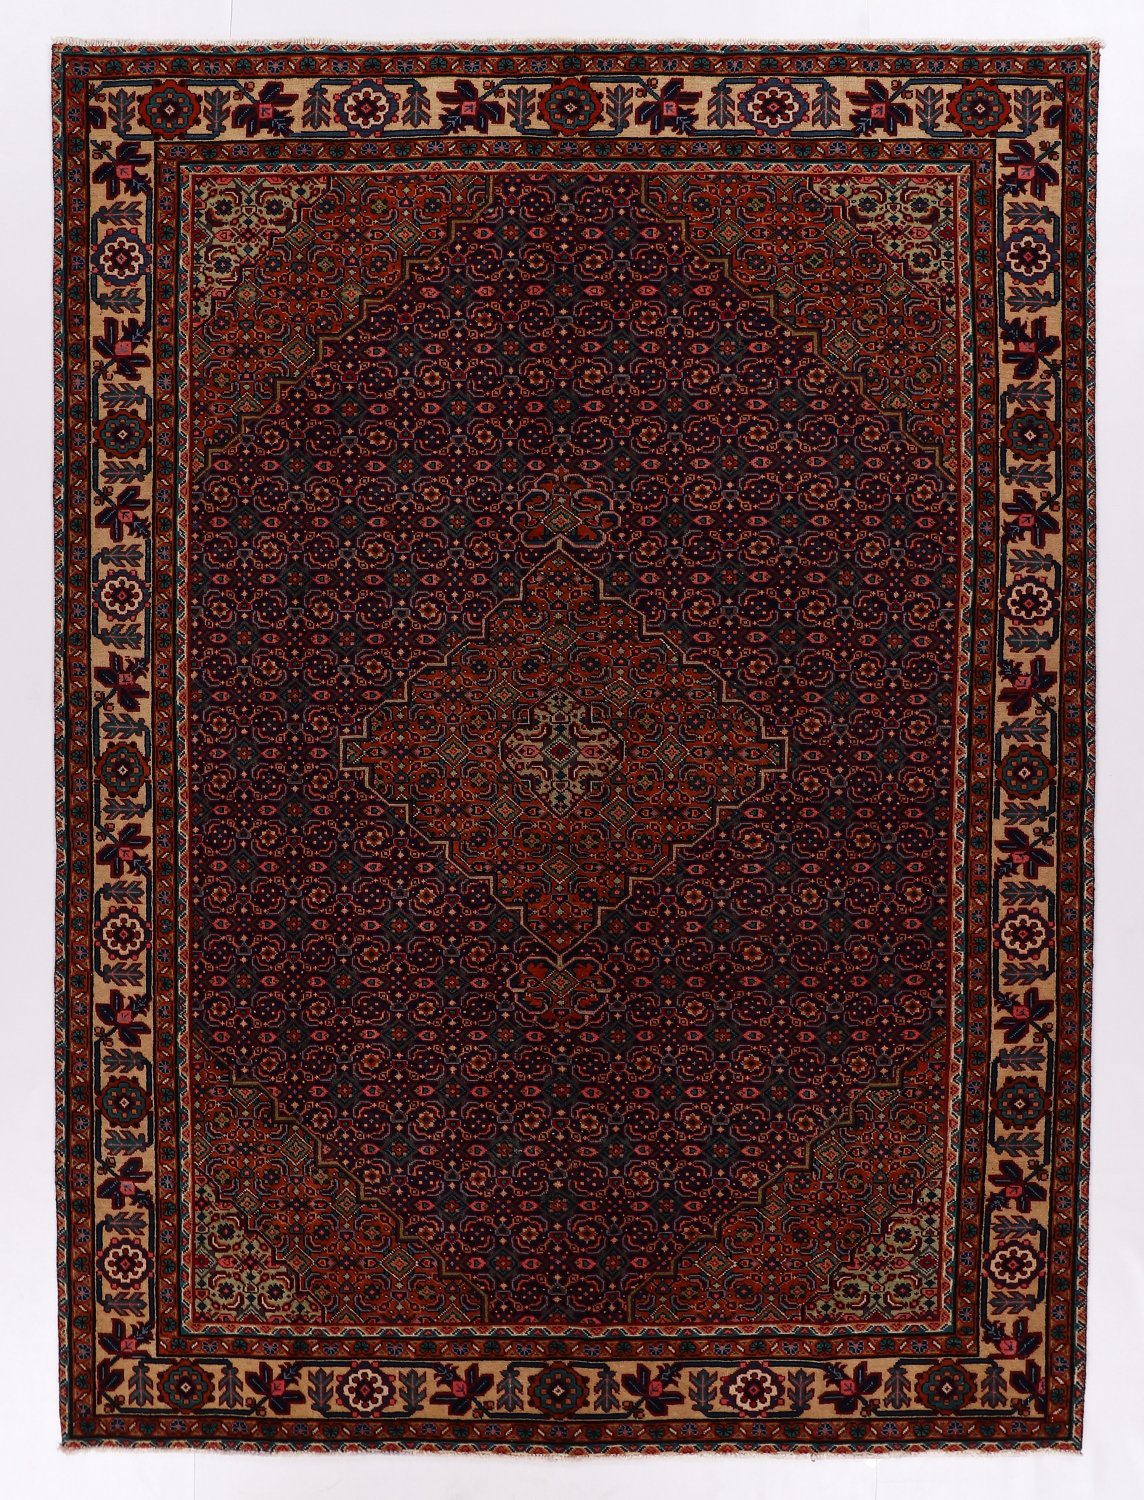 Persisk teppe Hamedan
284 x 196 cm